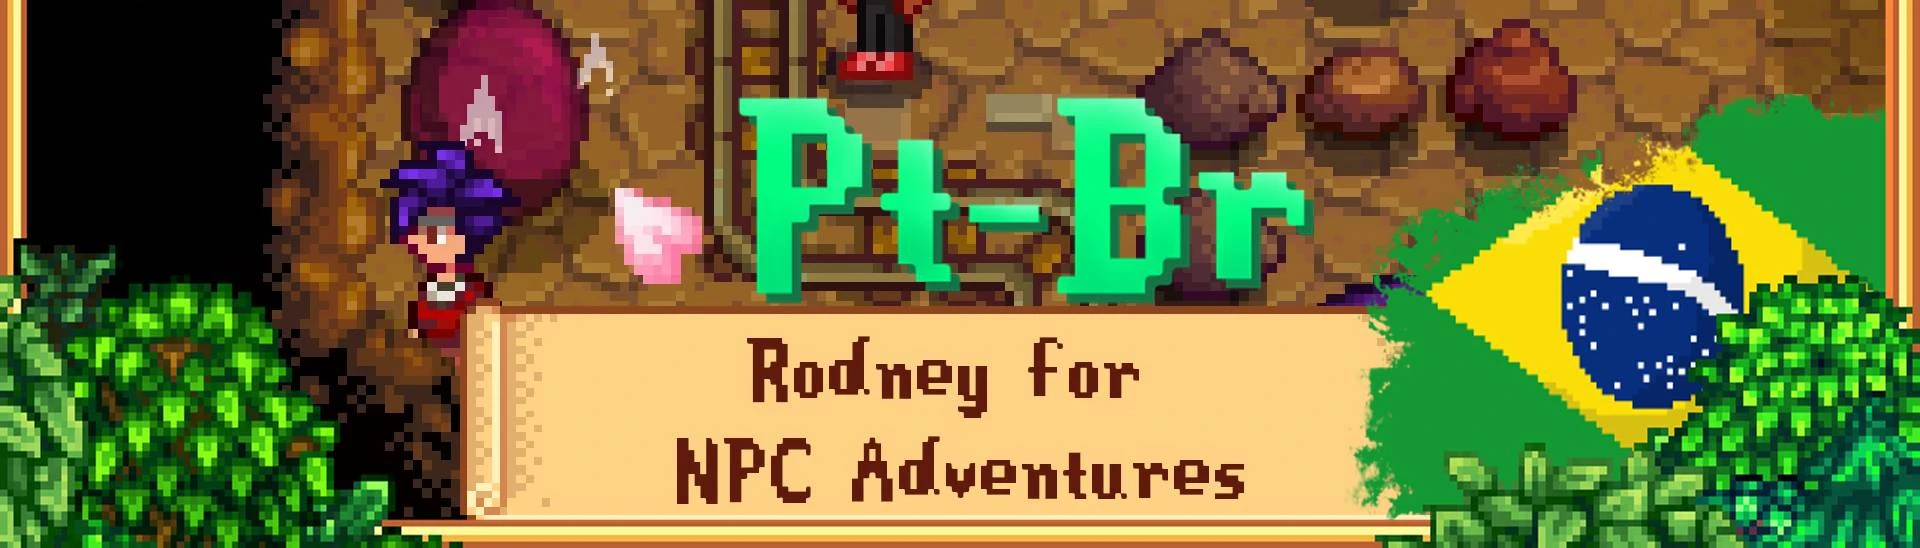 Rodney for NPC Adventures - PT BR at Stardew Valley Nexus - Mods and ...